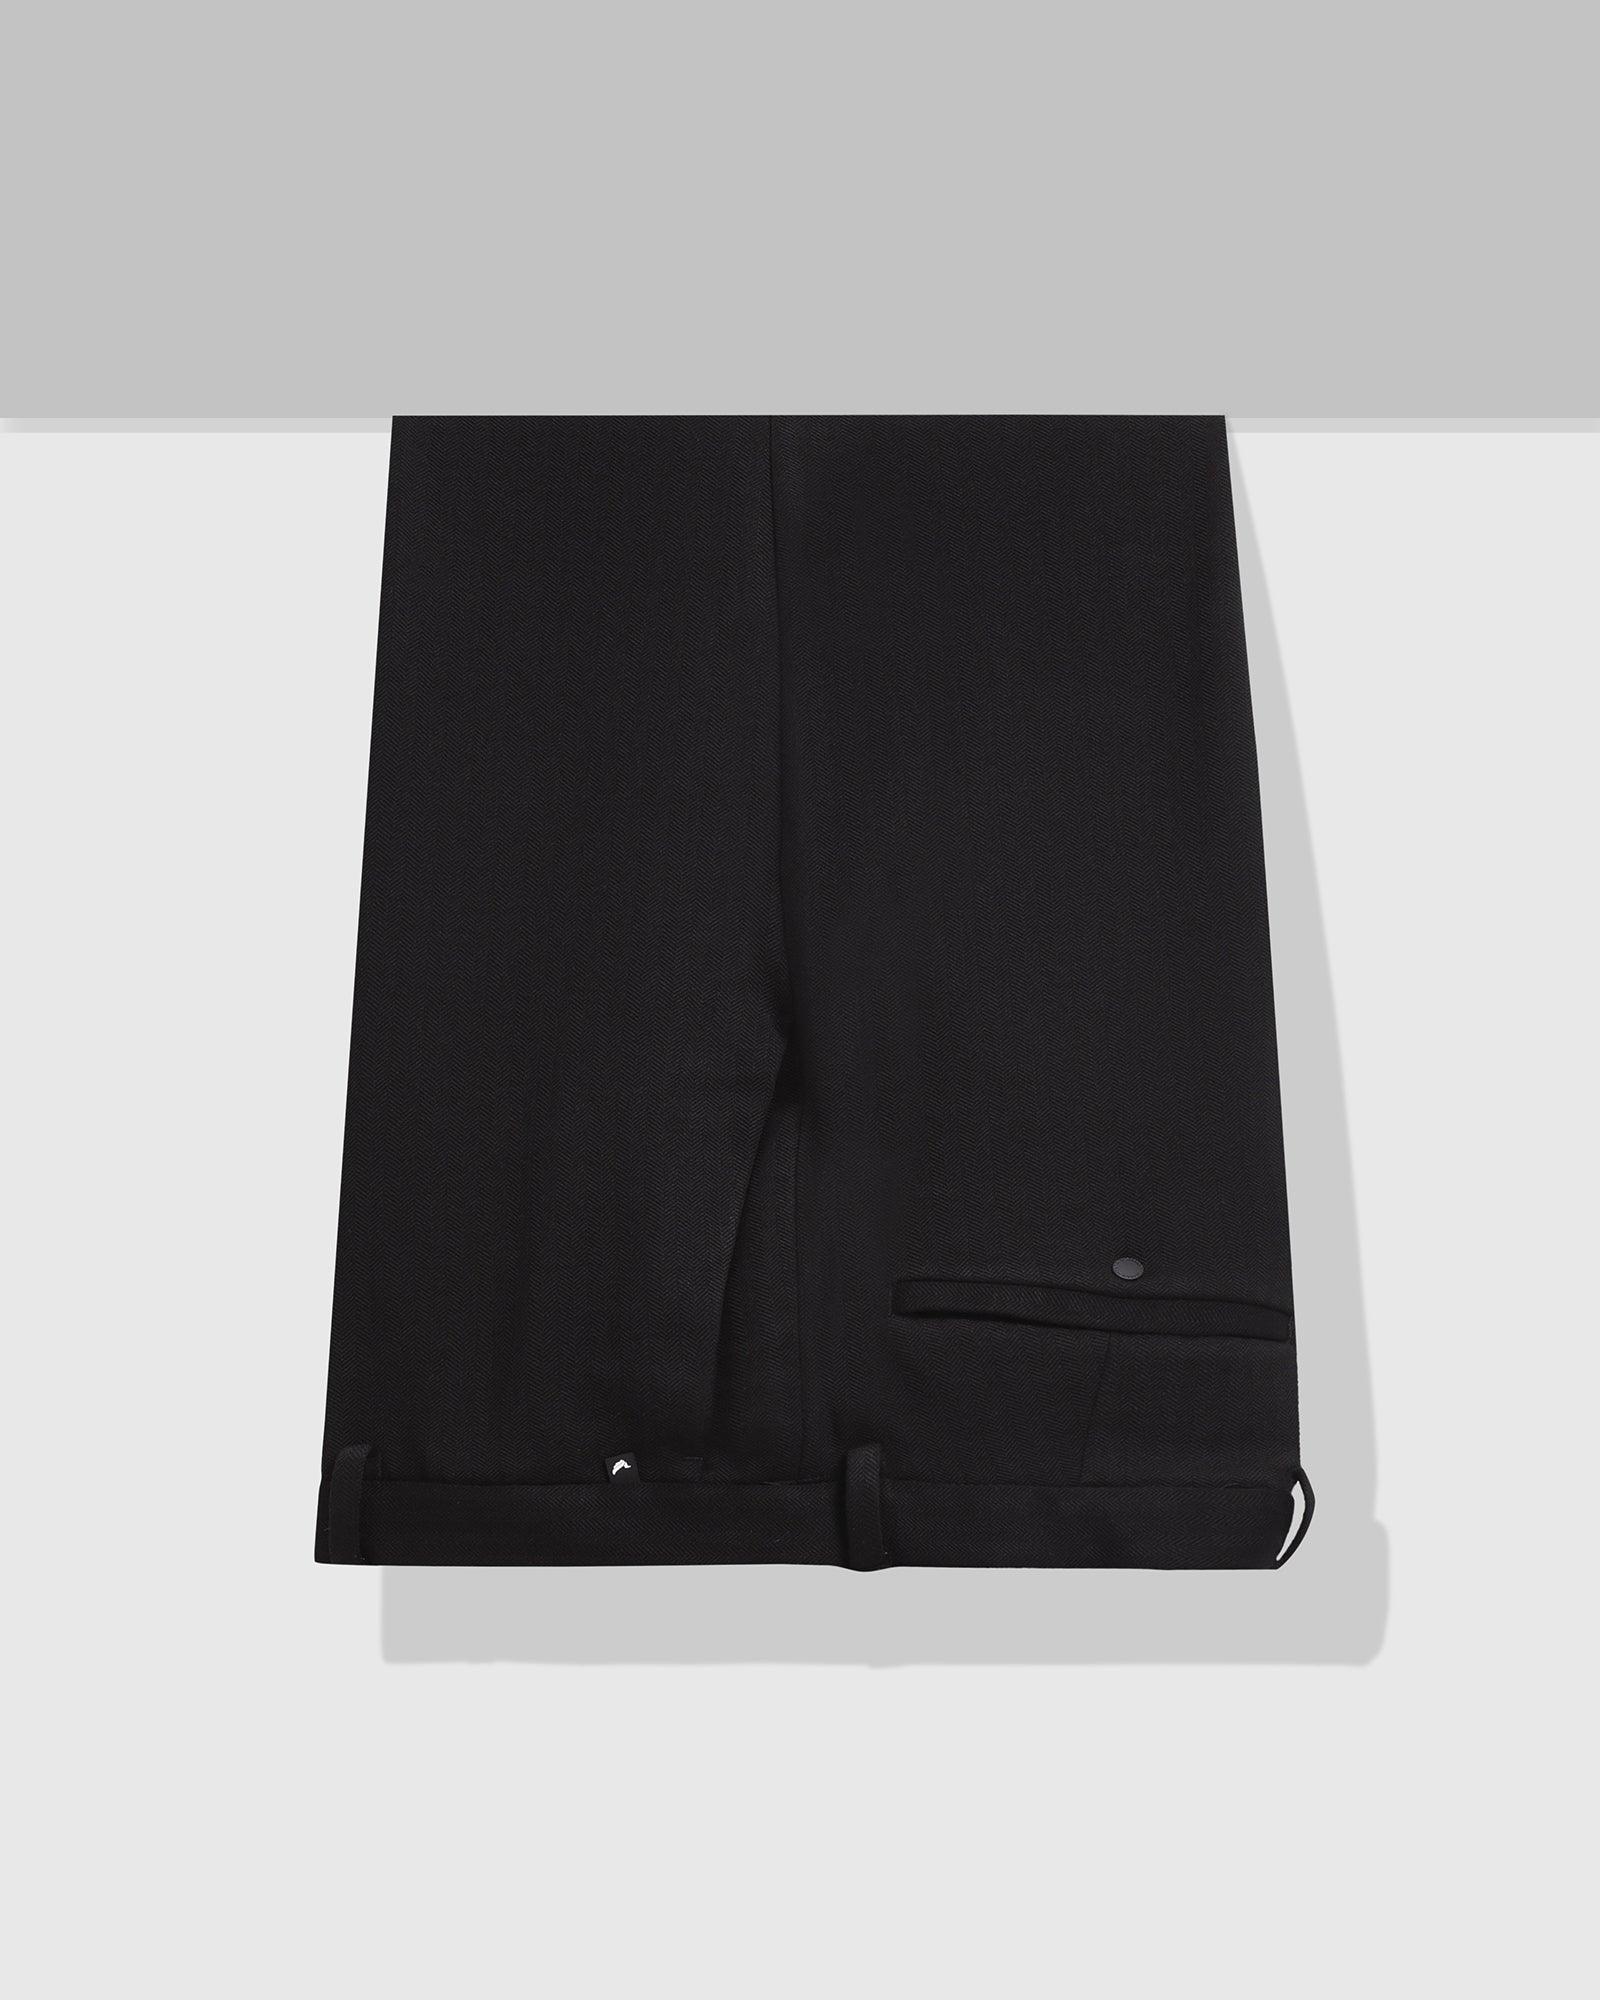 TechPro Slim Fit B-91 Formal Black Striped Trouser - Aiden